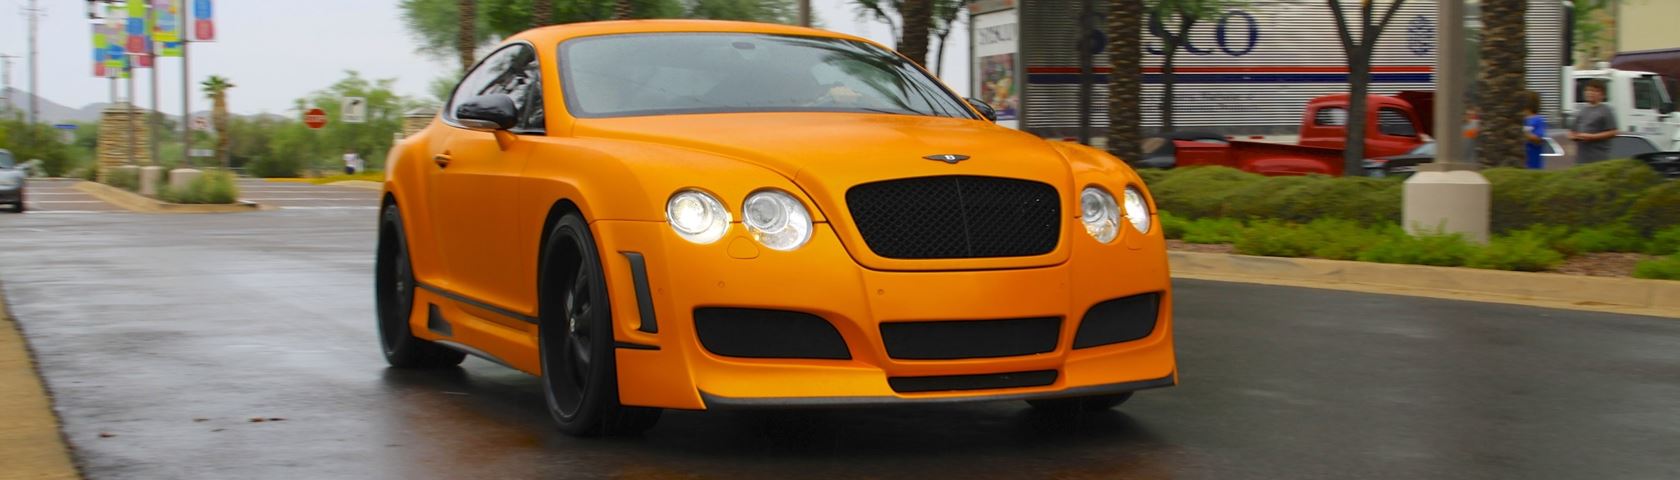 Bentley Continental GT Super Sport in Matte Orange